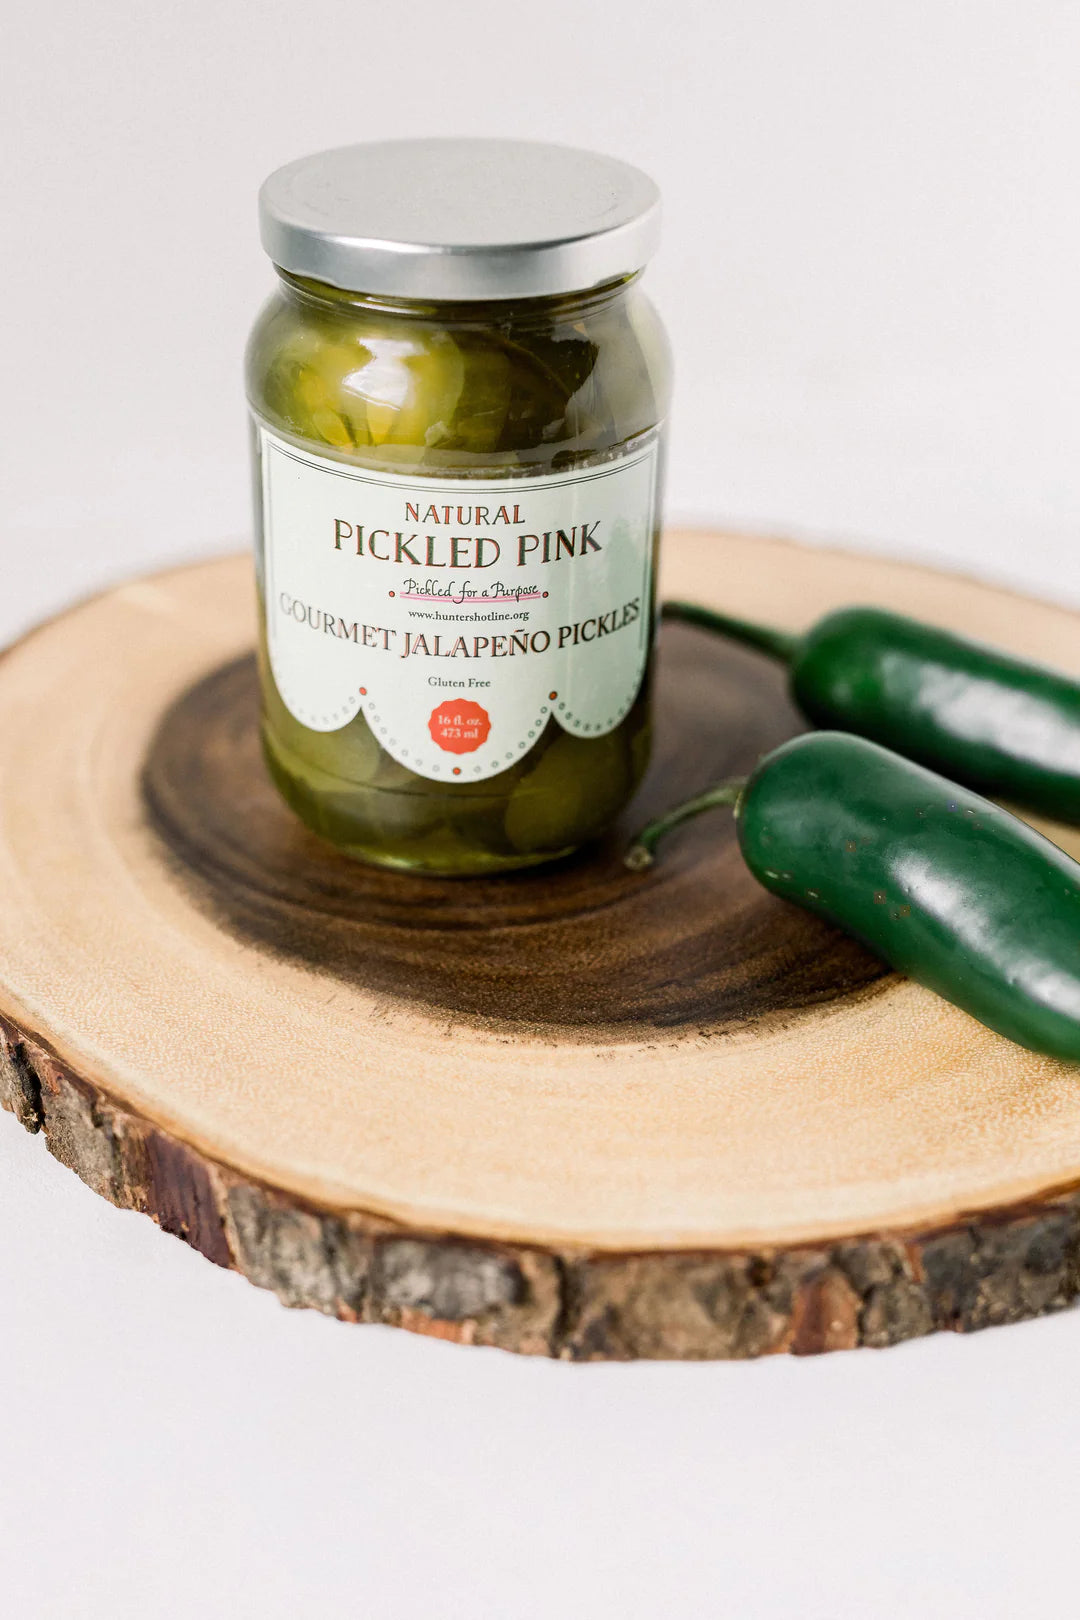 Gourmet Jalapeno Pickles